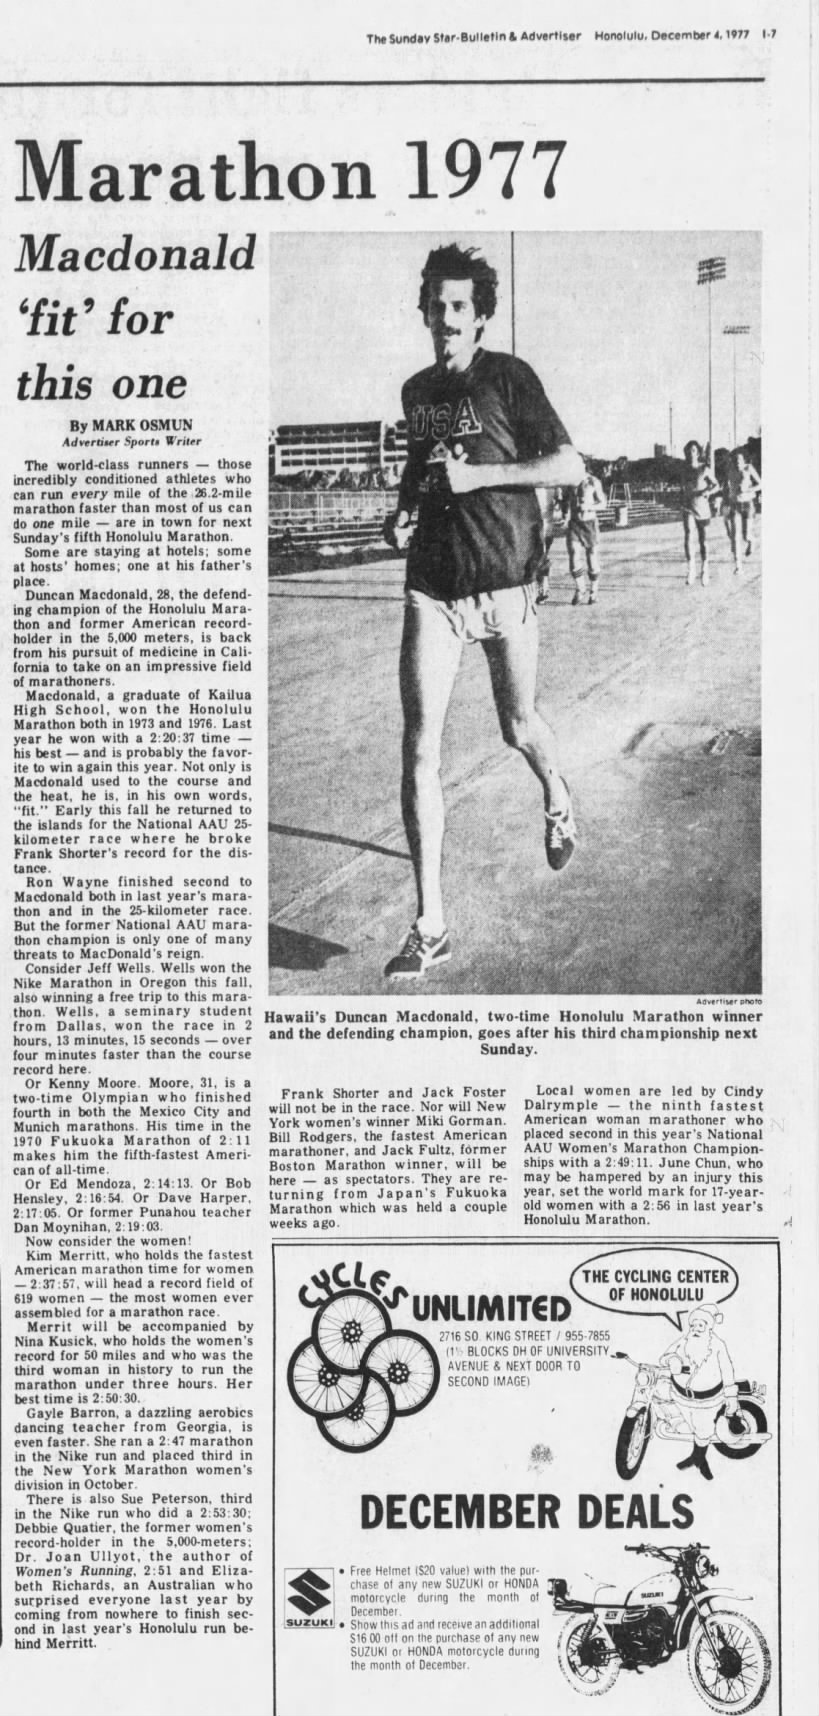 Honolulu Marathon, 1977: Macdonald 'fit' for this one